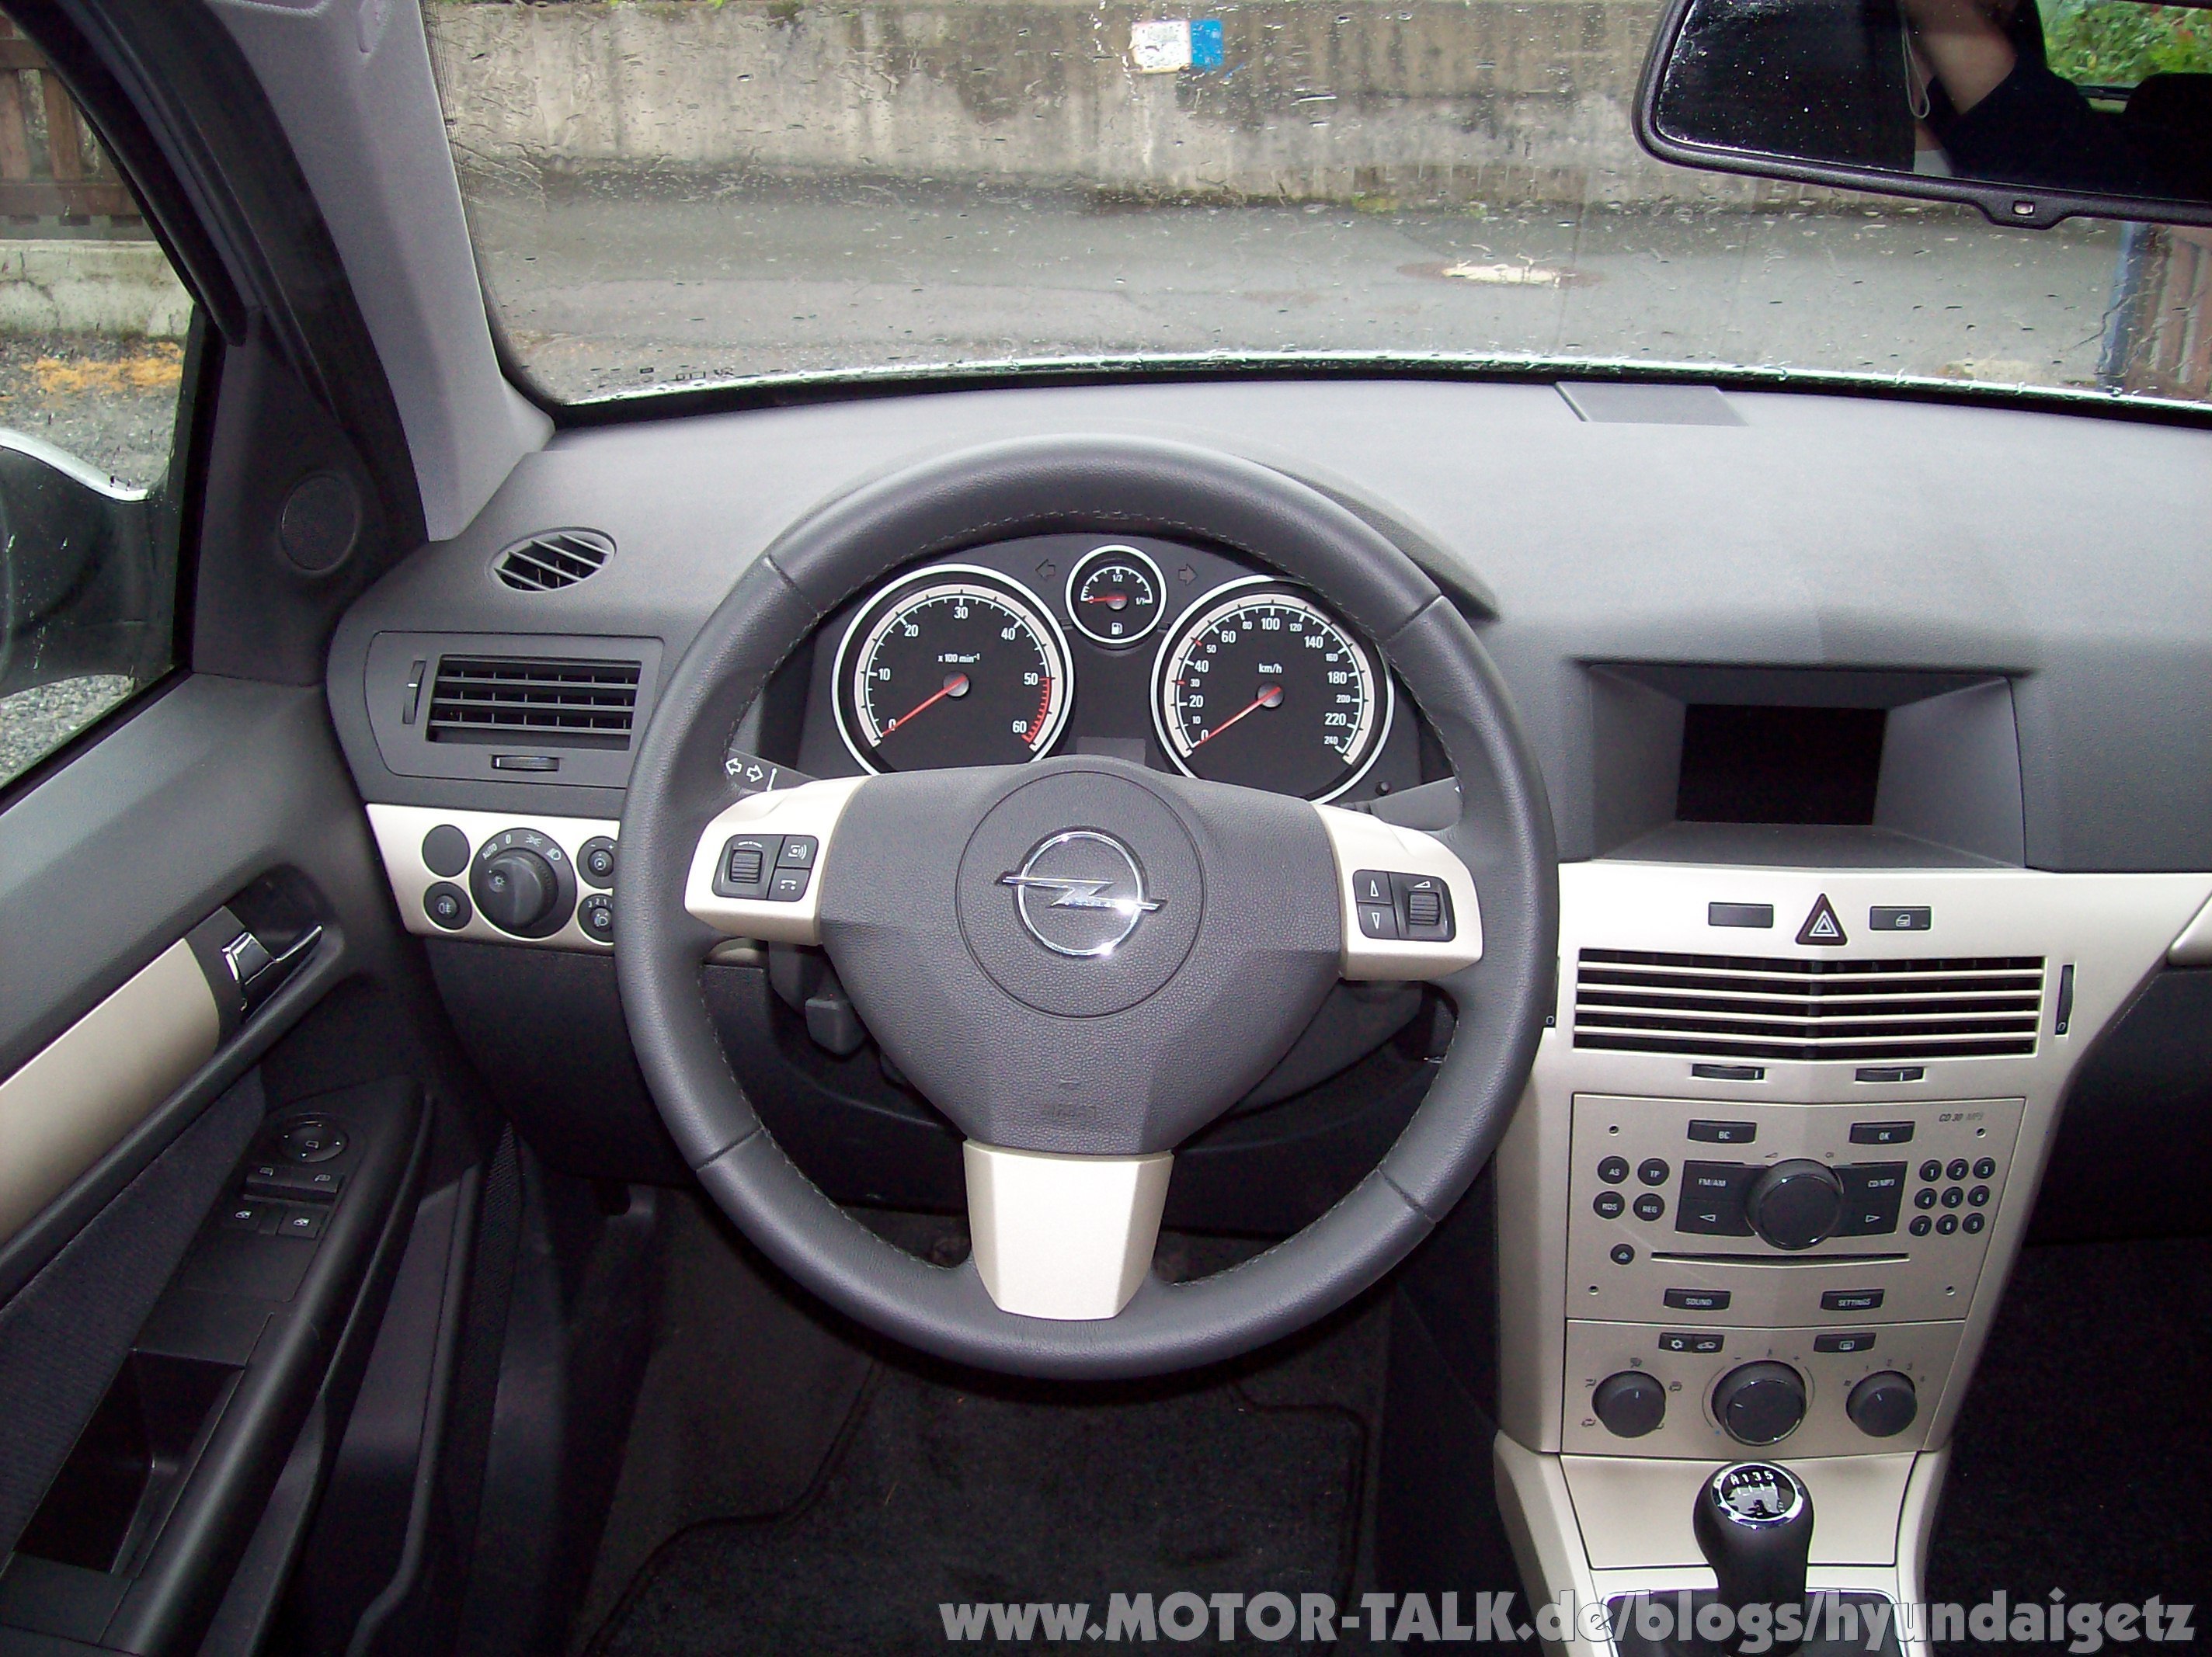 HyundaiGetz: HyundaiGetz fÃ¤hrt Opel Astra Caravan.